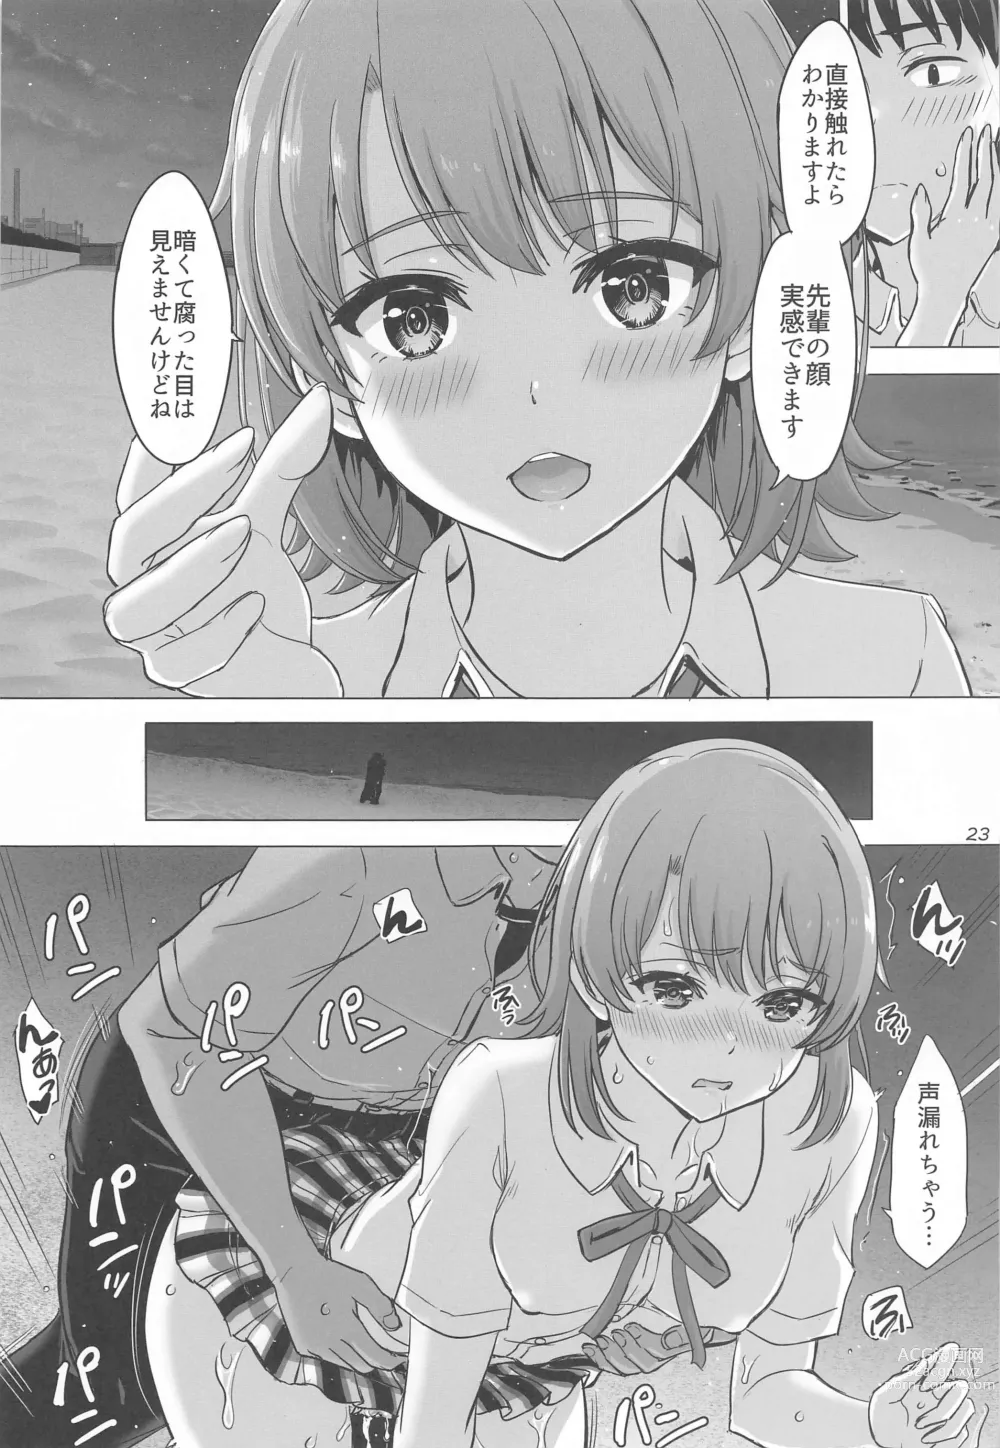 Page 22 of doujinshi Isshiki Iroha no Iyarashii Natsuyasumi. - Irohas days of summer are many sex next year.